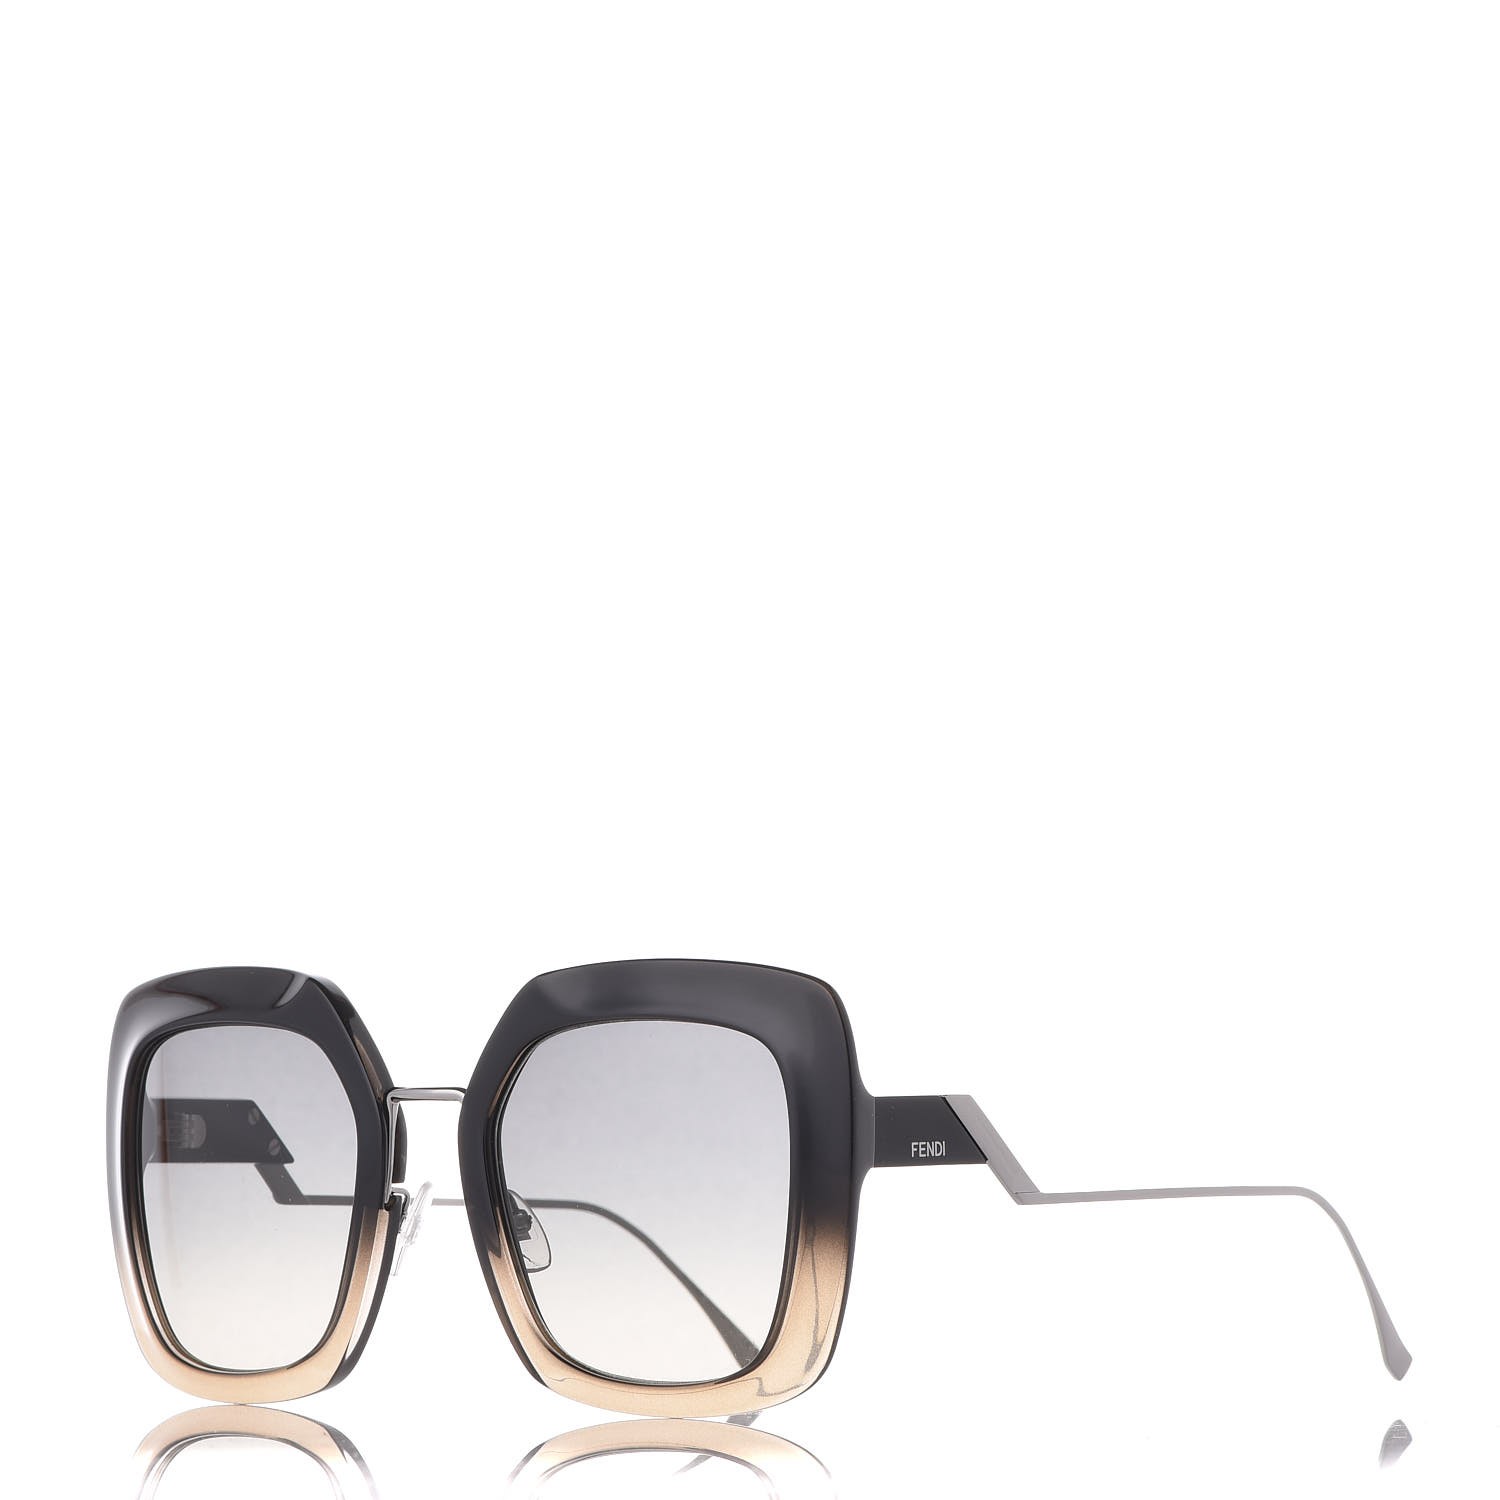 fendi black square sunglasses